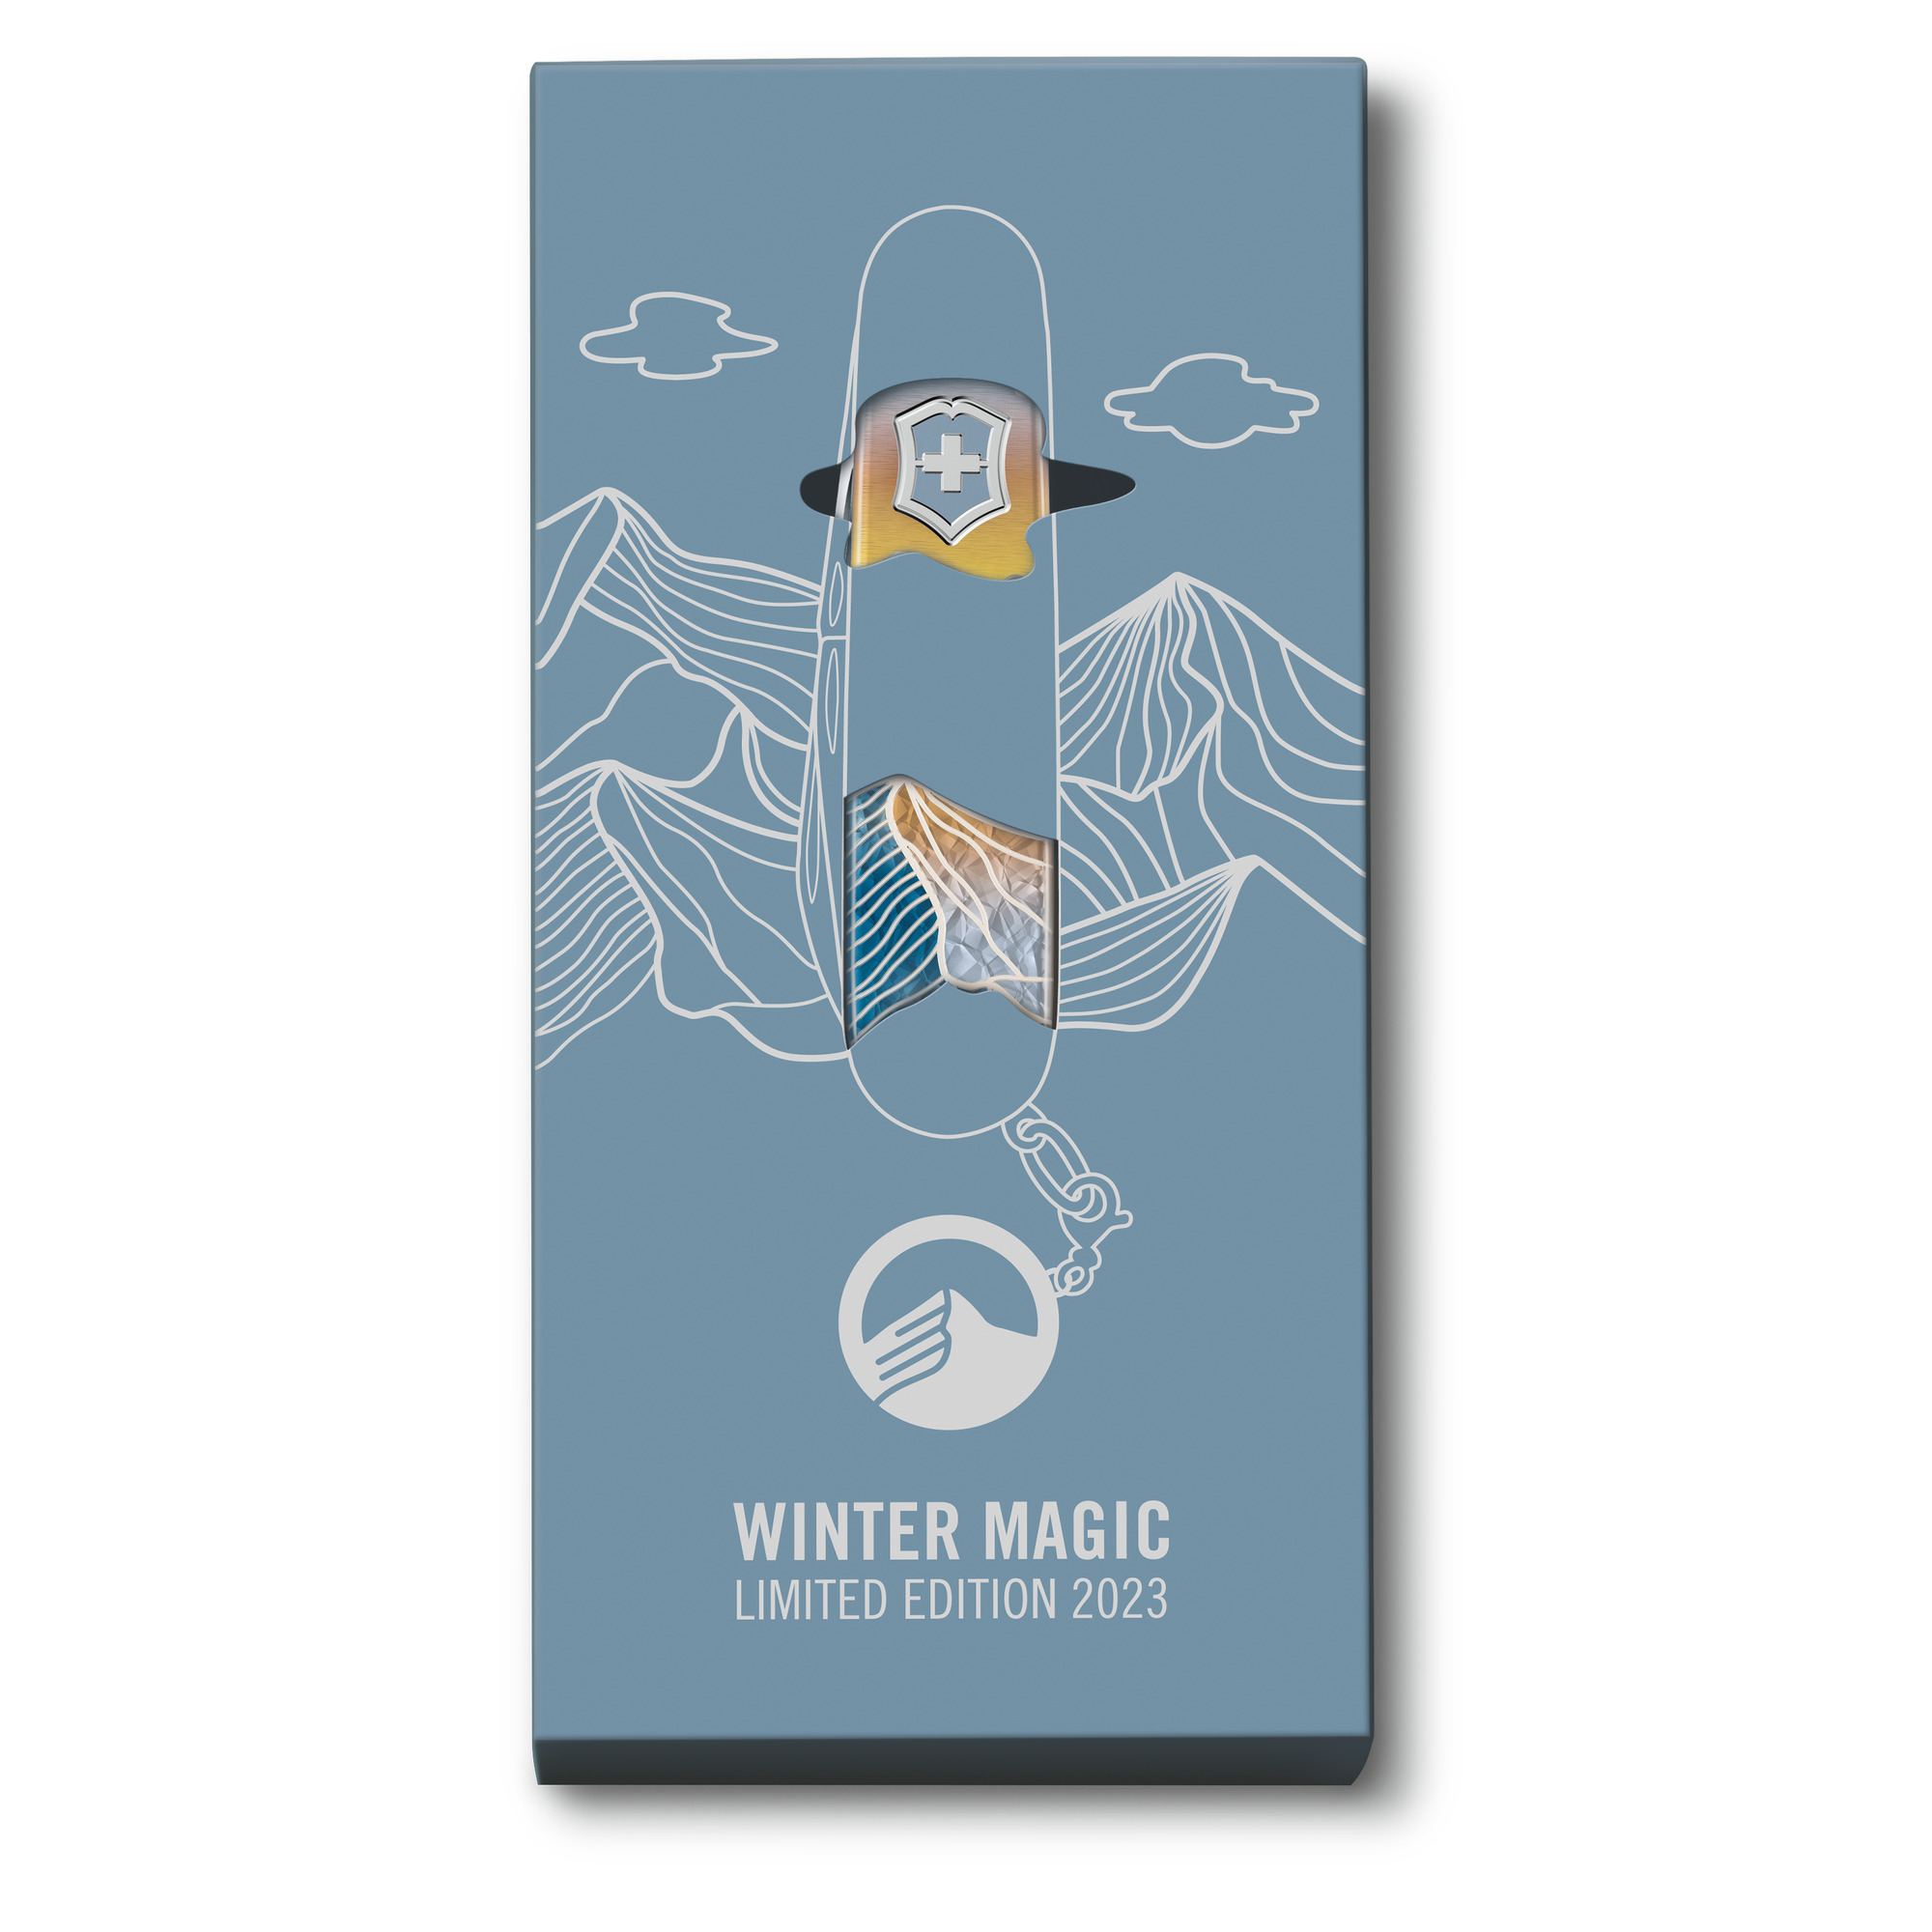 Victorinox Cadet Alox Winter Magic Limited Edition 2023